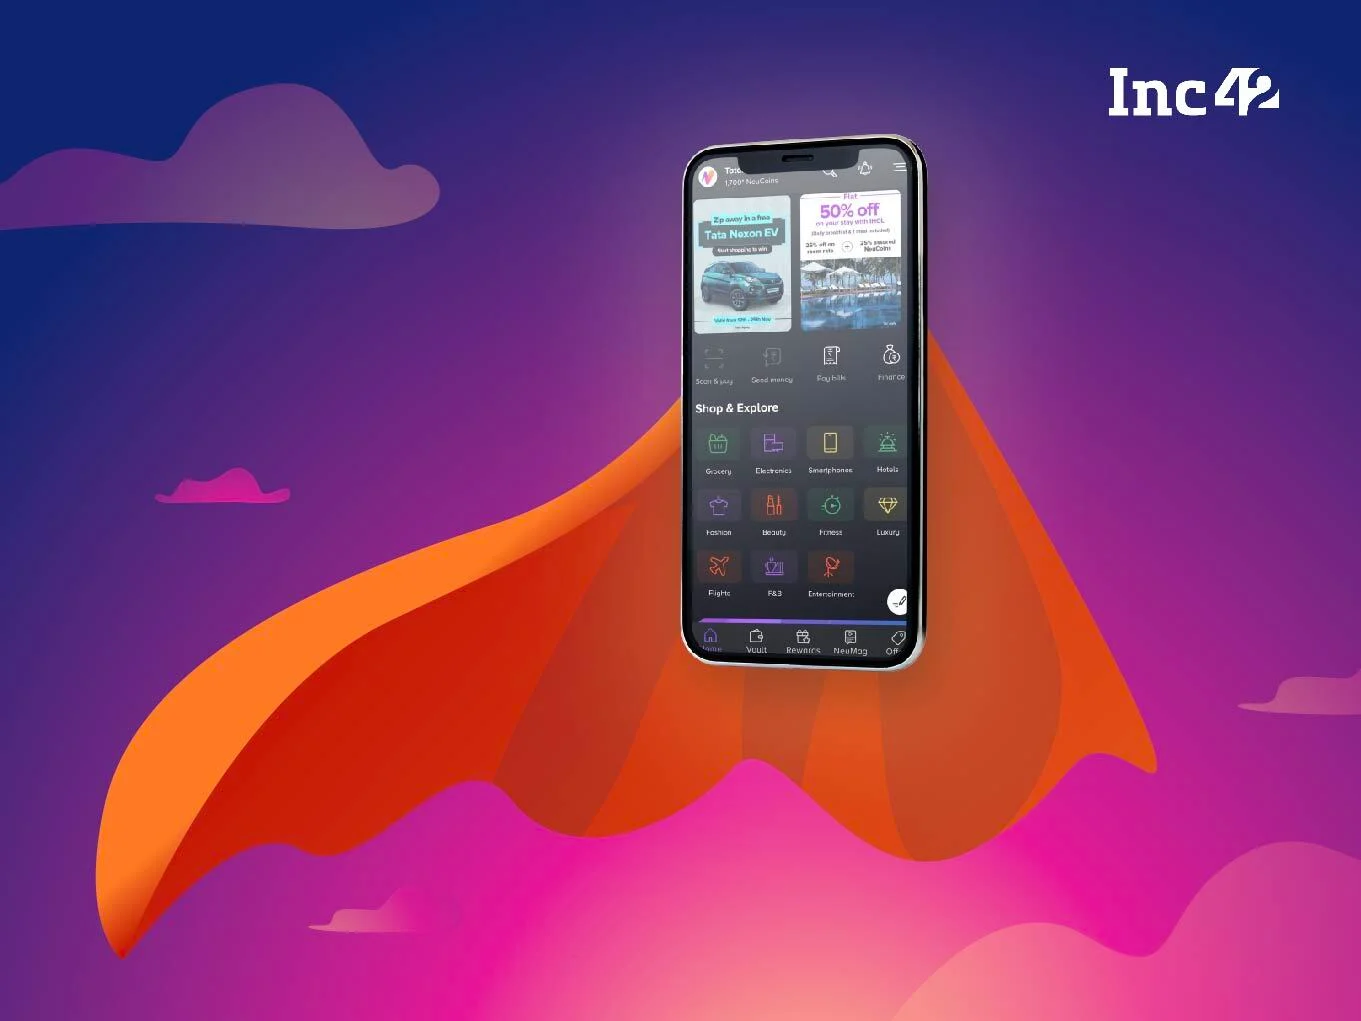 Super App Tata Neu Logs 1 Mn Downloads On Google Play